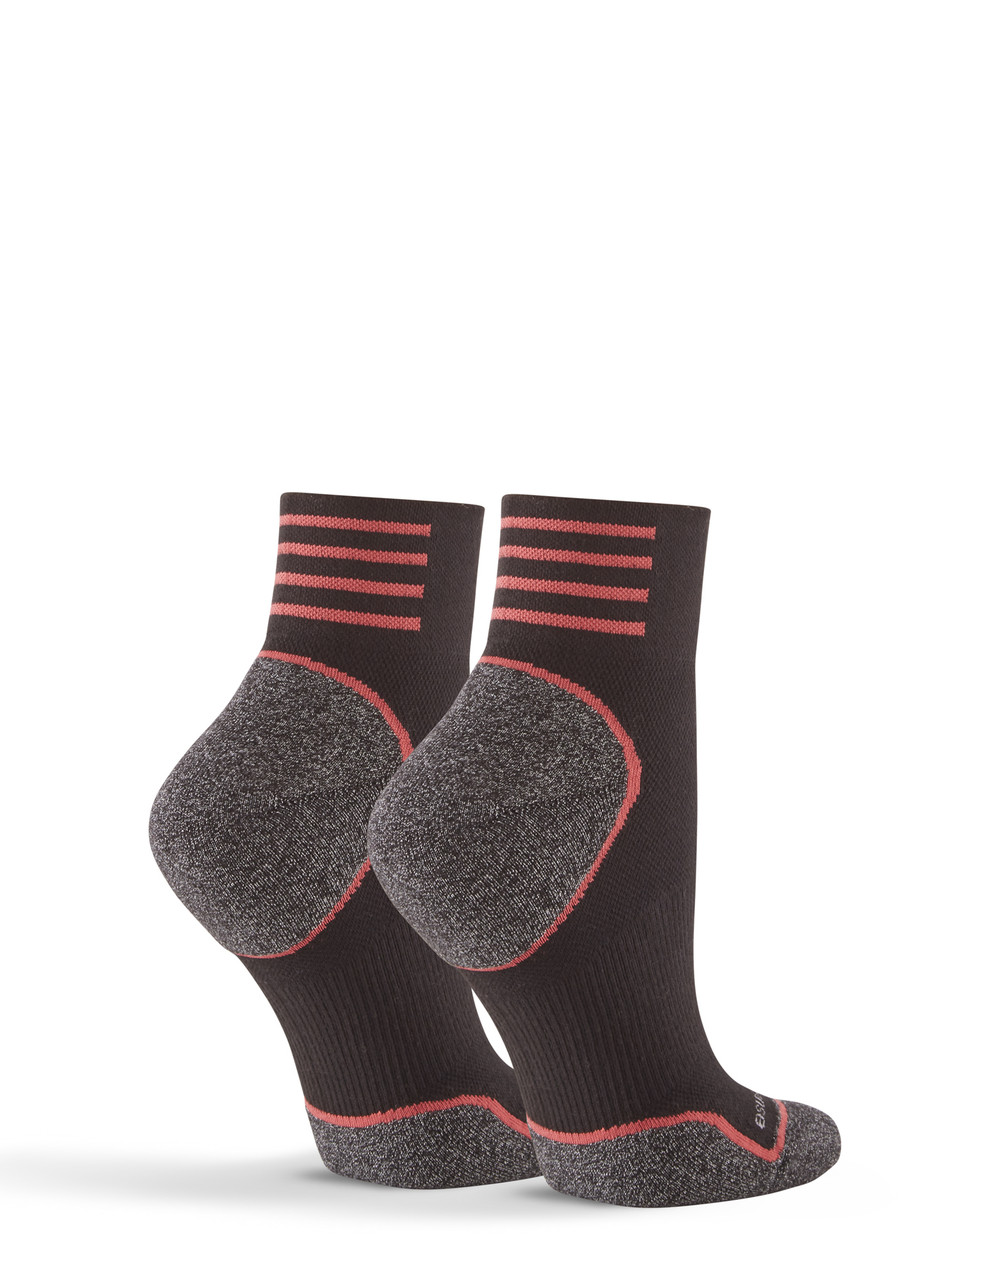 No Nonsense Soft & Breathable Socks, Cushioned, Quarter Top, 4-10, Women's, Ropa